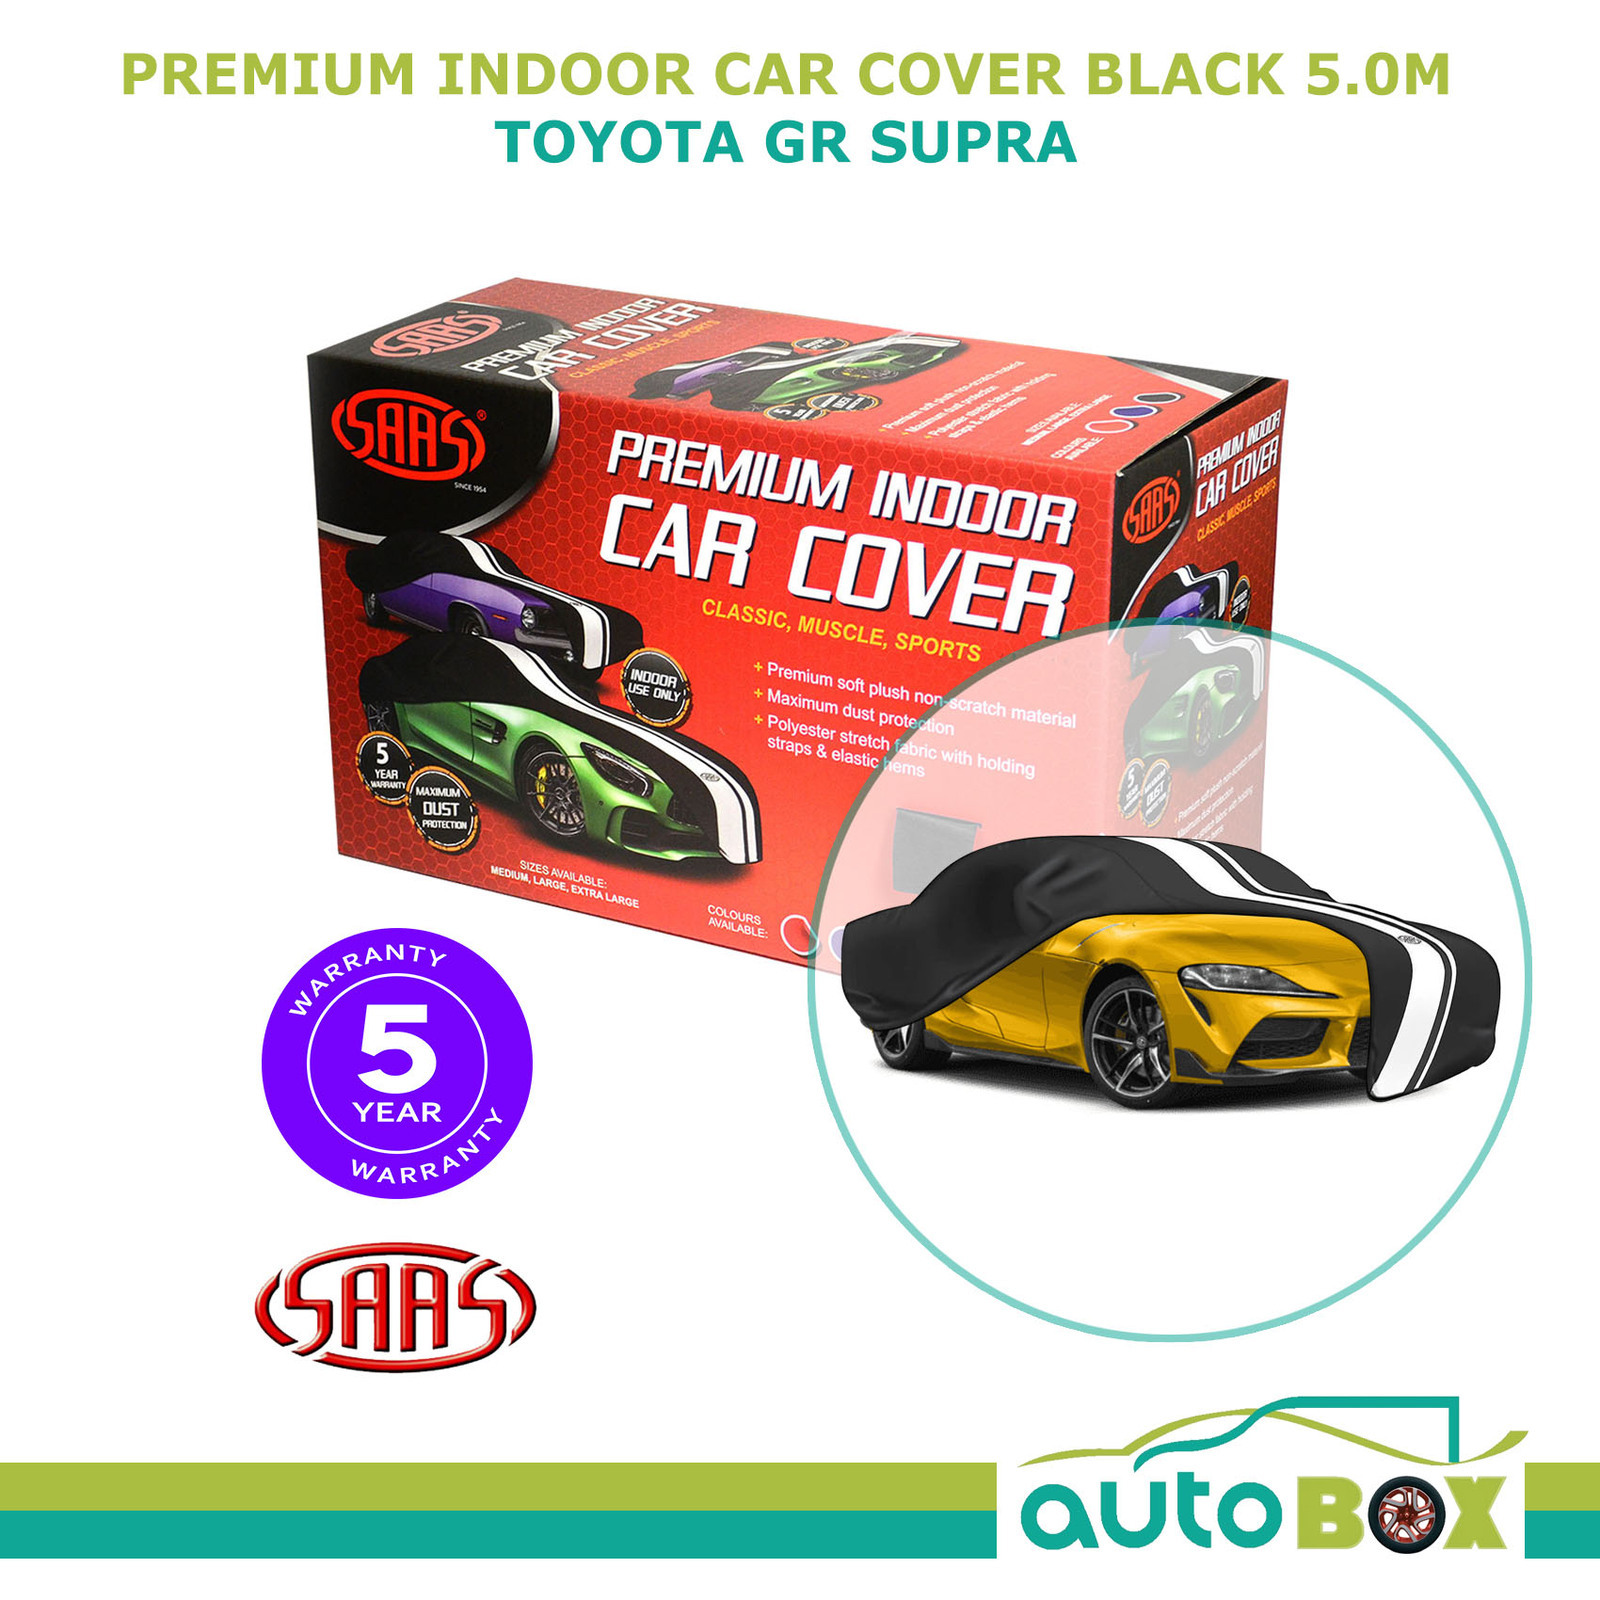 SAAS SHOW CAR COVER Suits Toyota GR Supra 5.0m Black LARGE PREMIUM